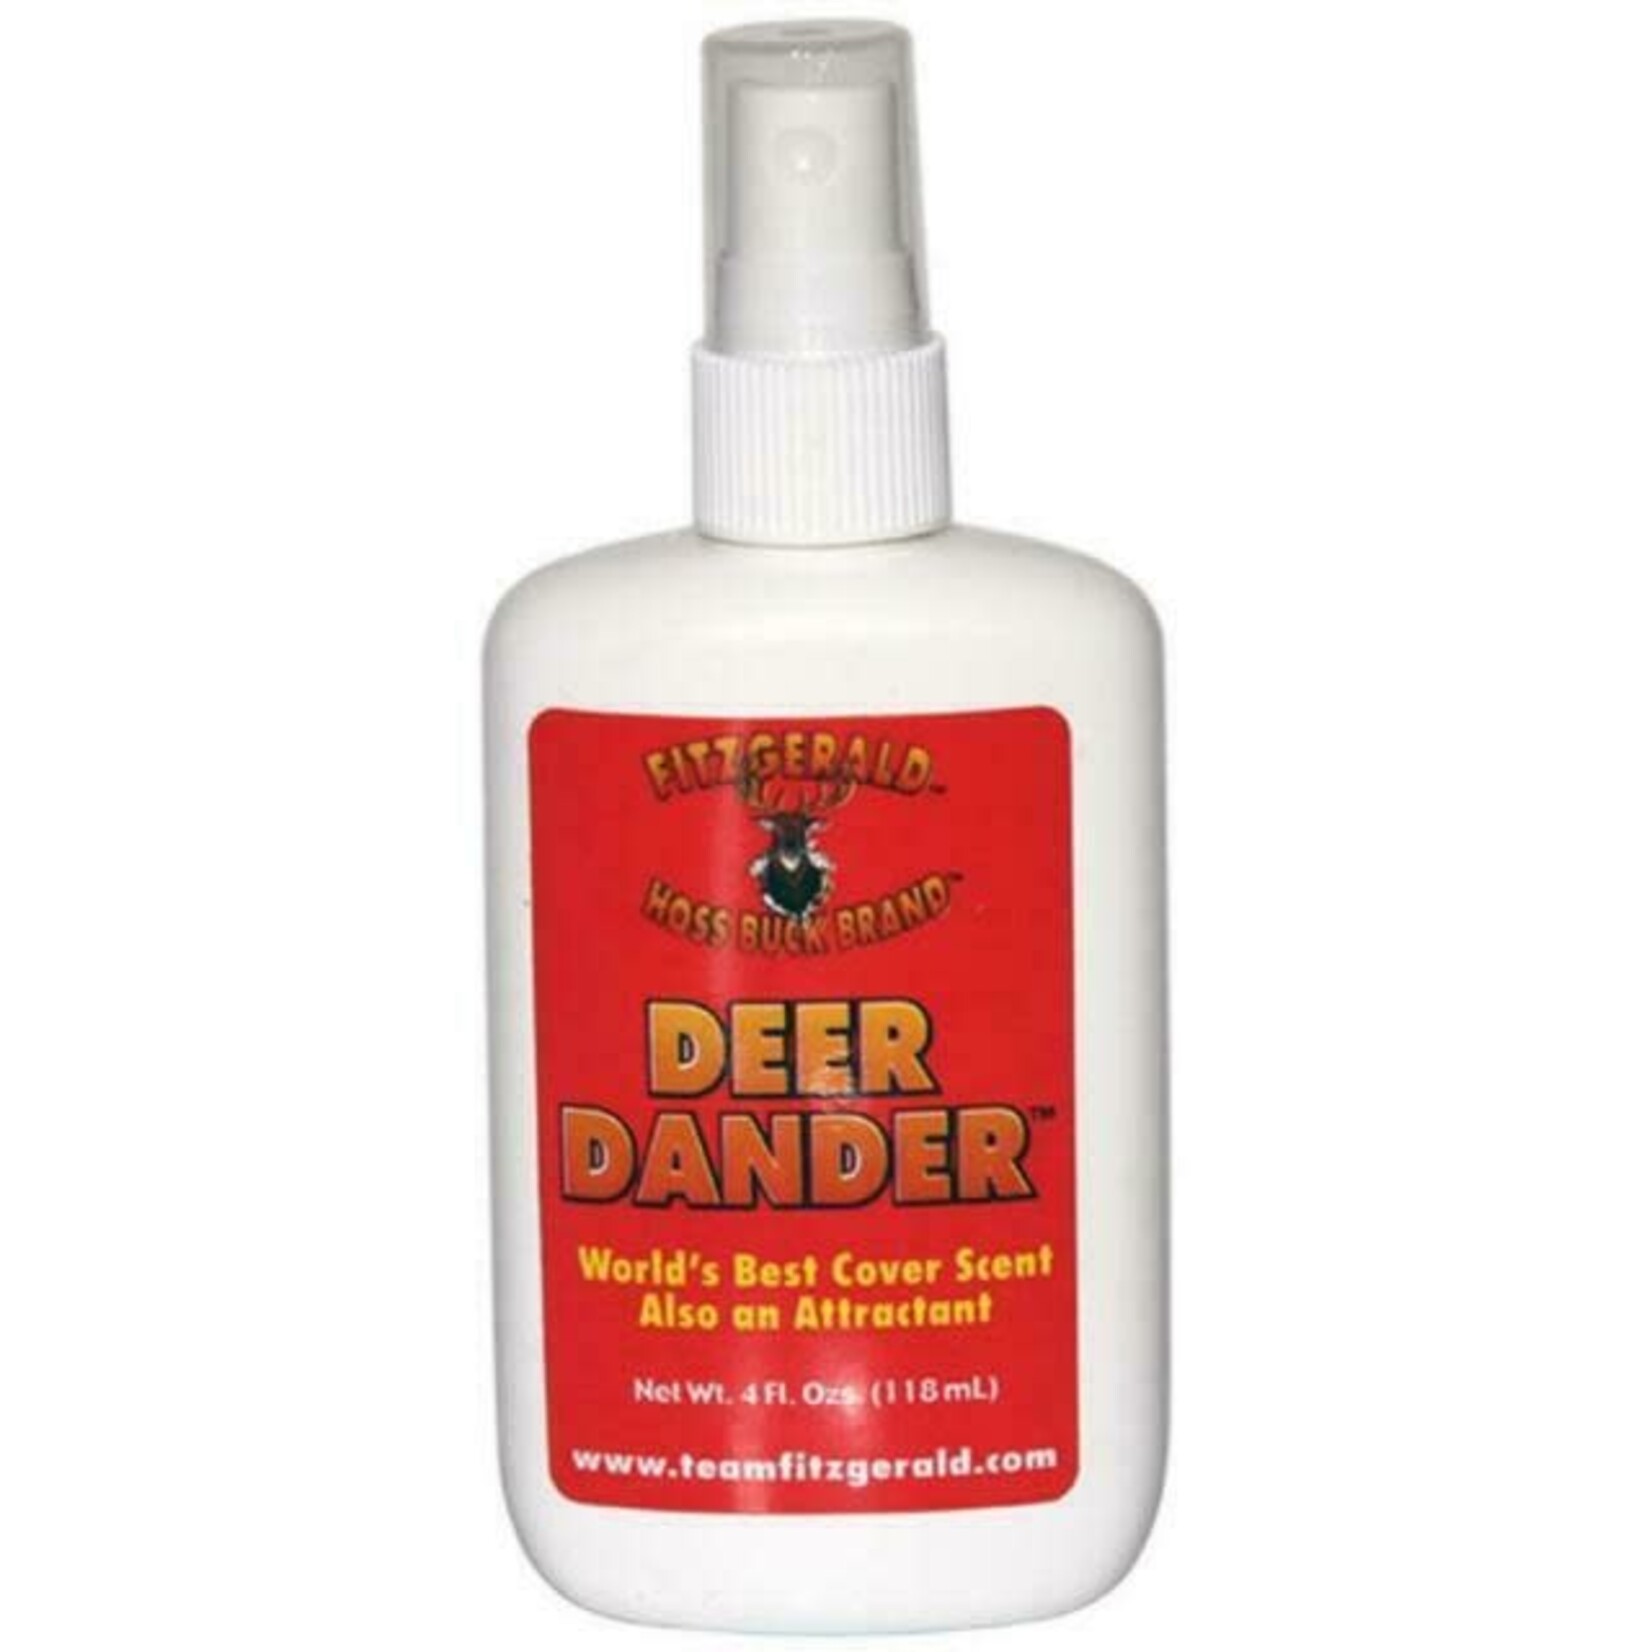 Deer Dander Cover Scent 4oz